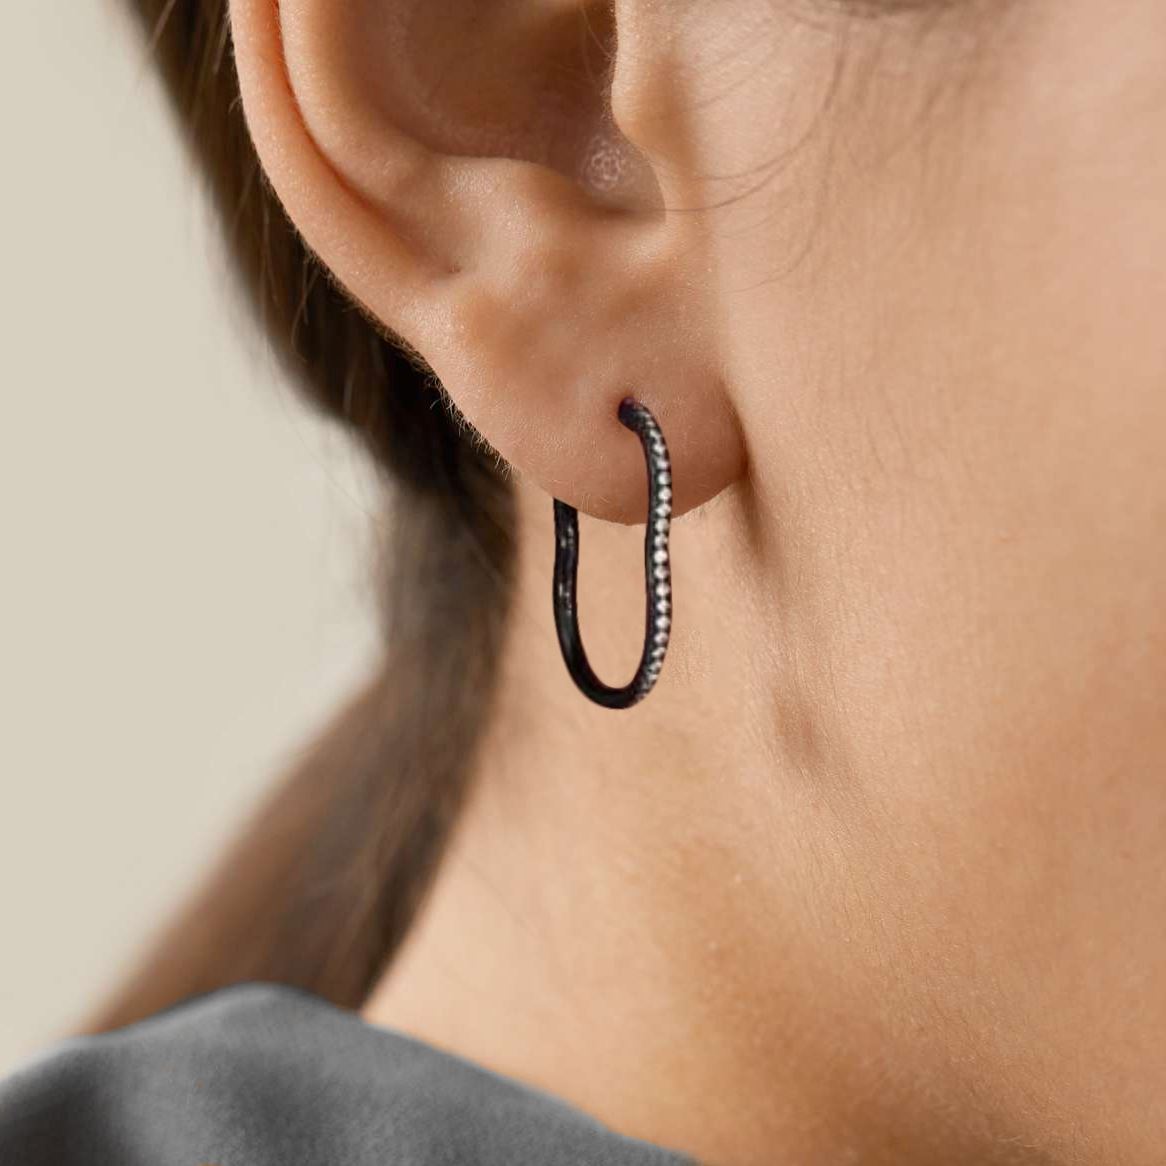 Mens Earrings Black Stud Earrings Men 6mm Round Steel - Etsy UK | Mens earrings  studs, Black stud earrings, Men earrings